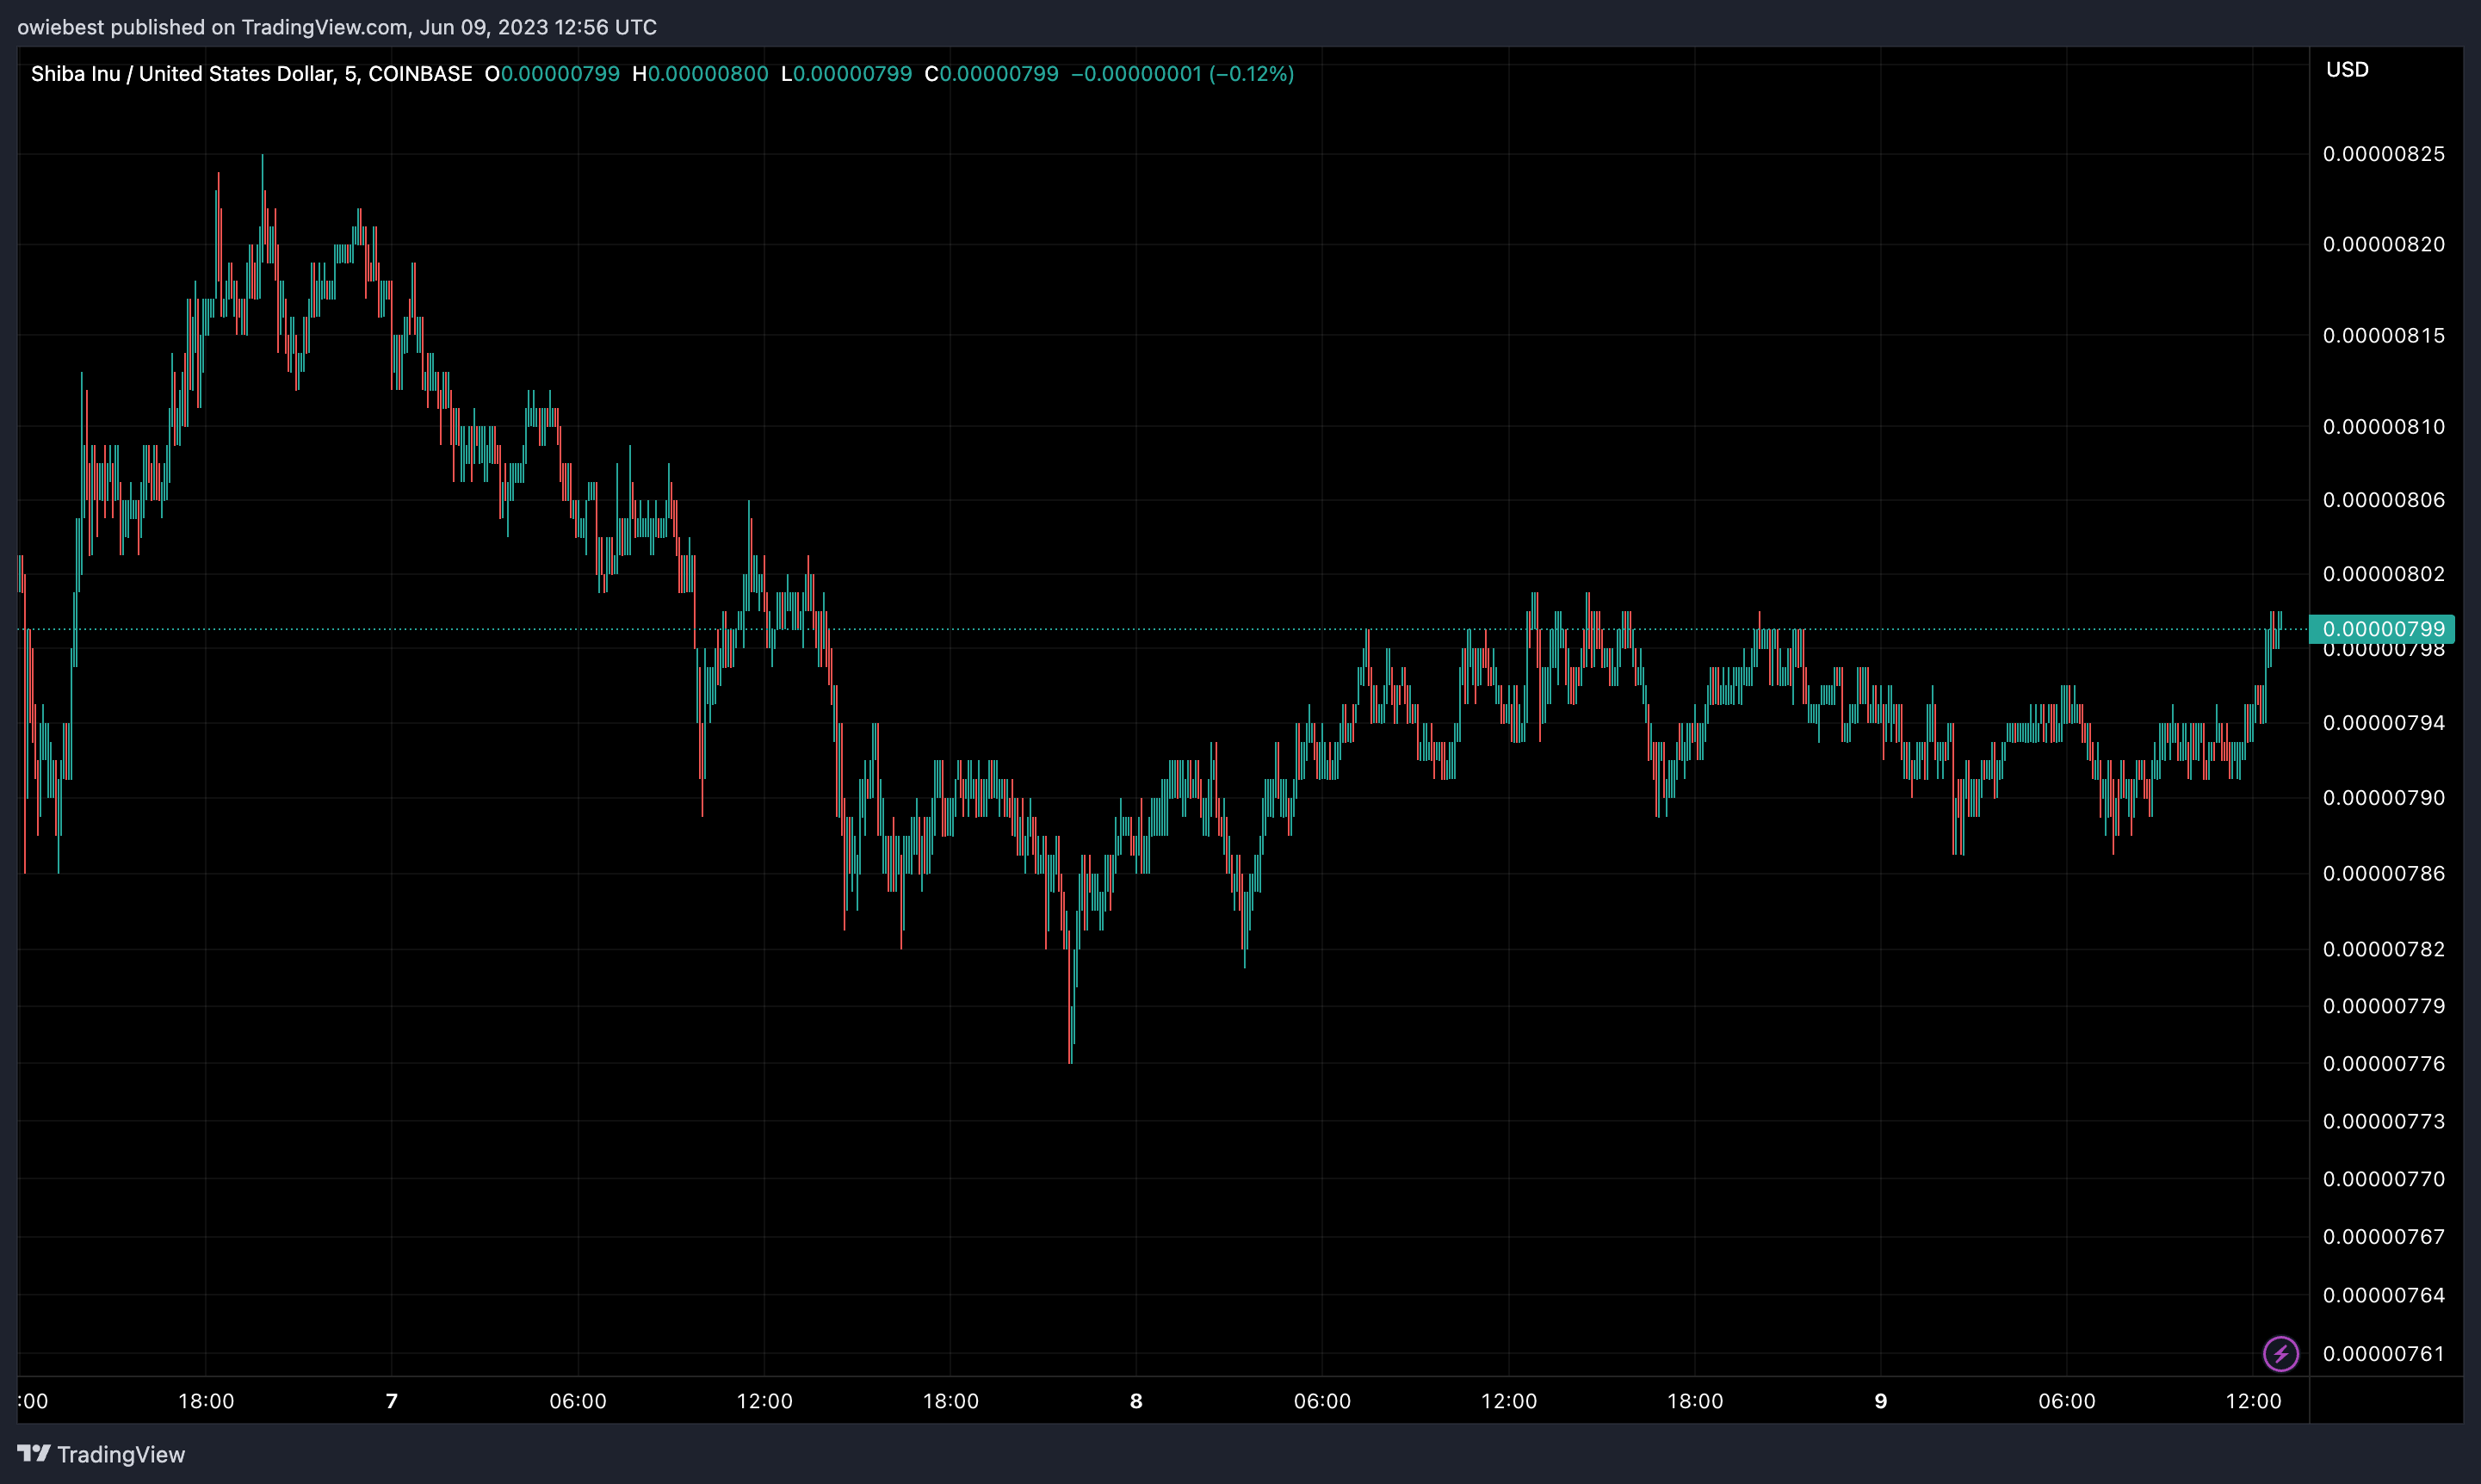 Shiba Inu price chart from TradingView.com